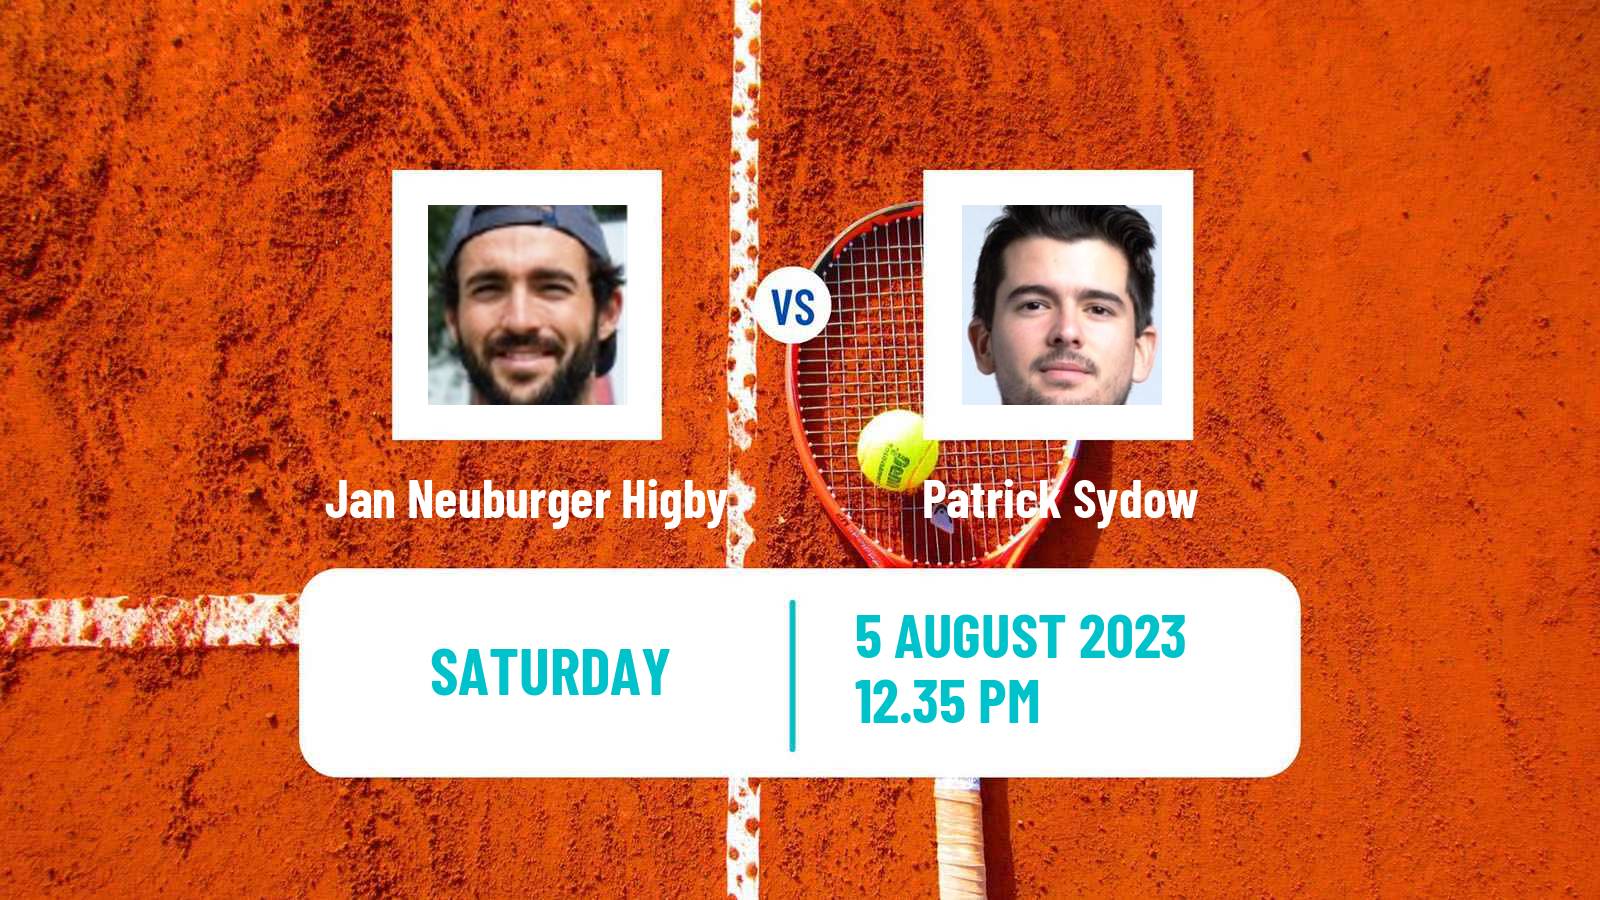 Tennis Davis Cup Group IV Jan Neuburger Higby - Patrick Sydow